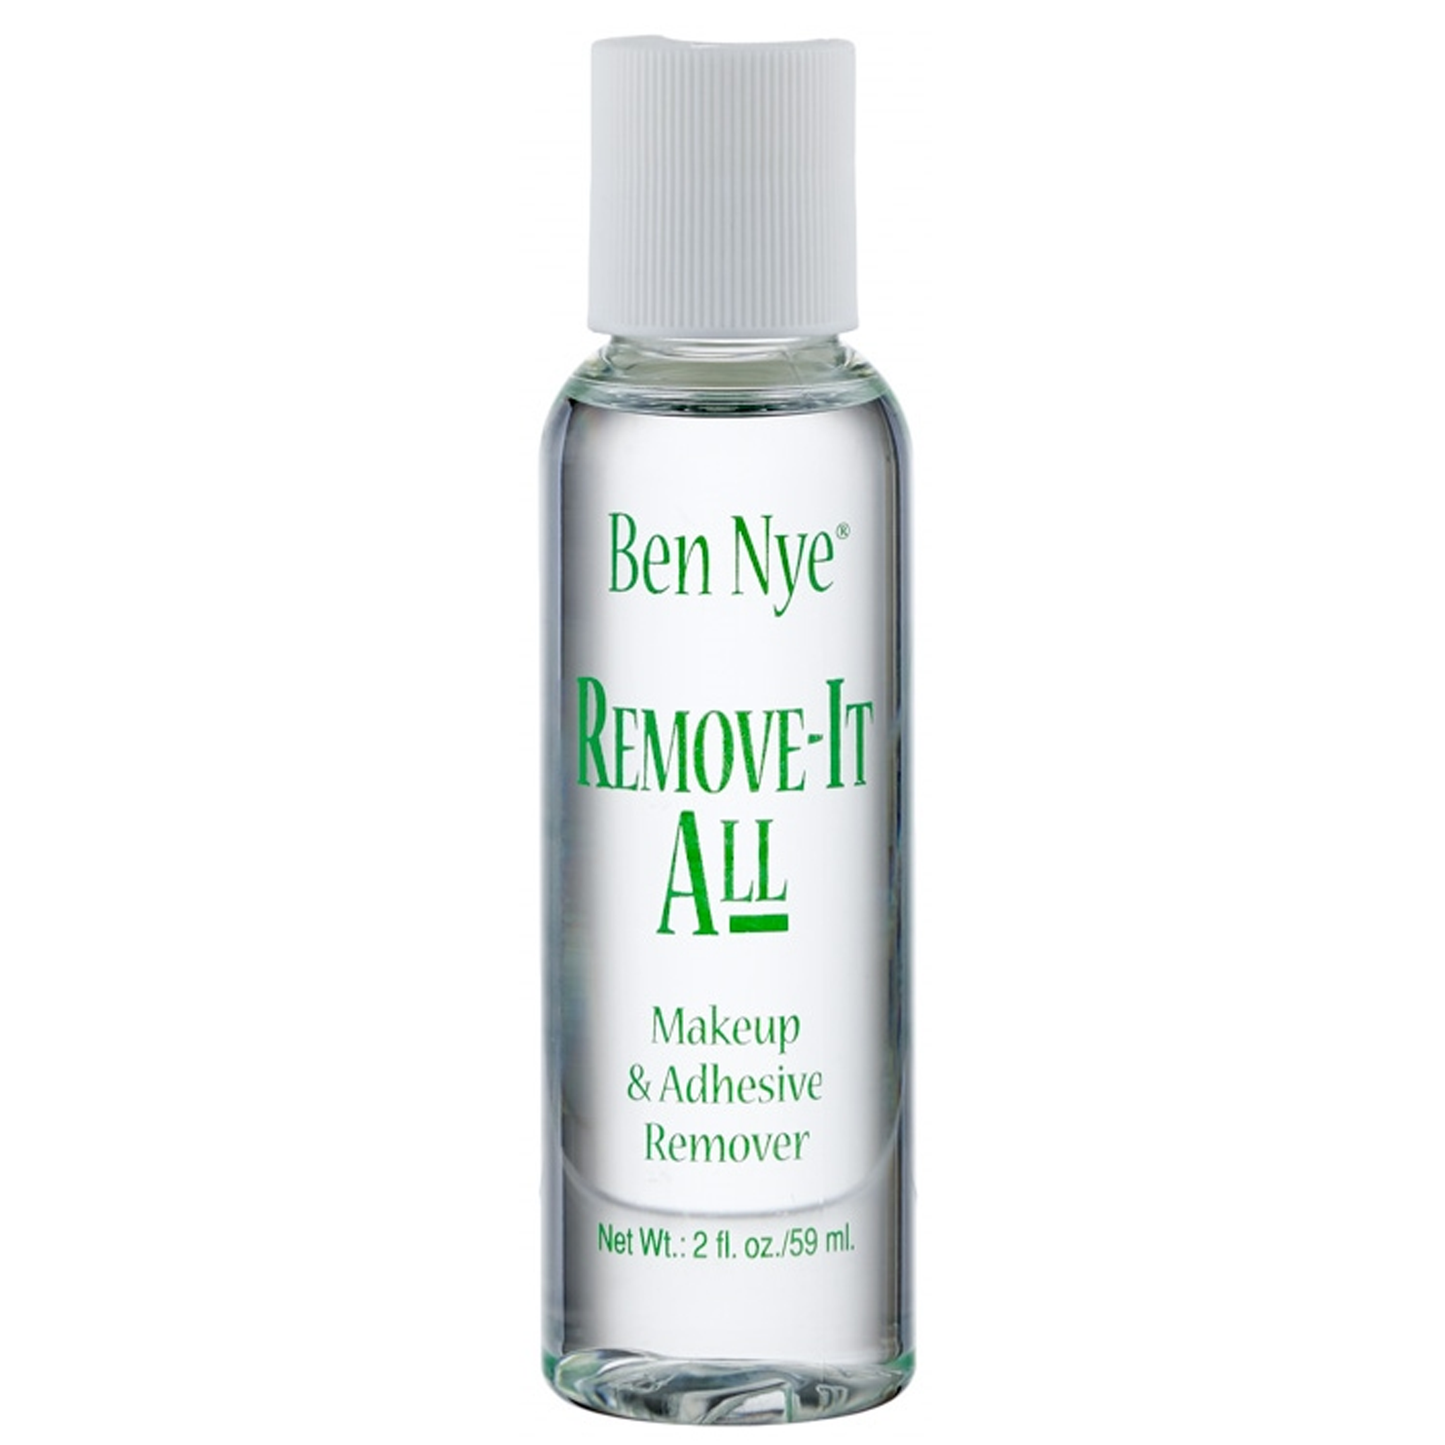 Ben Nye Remove-It All